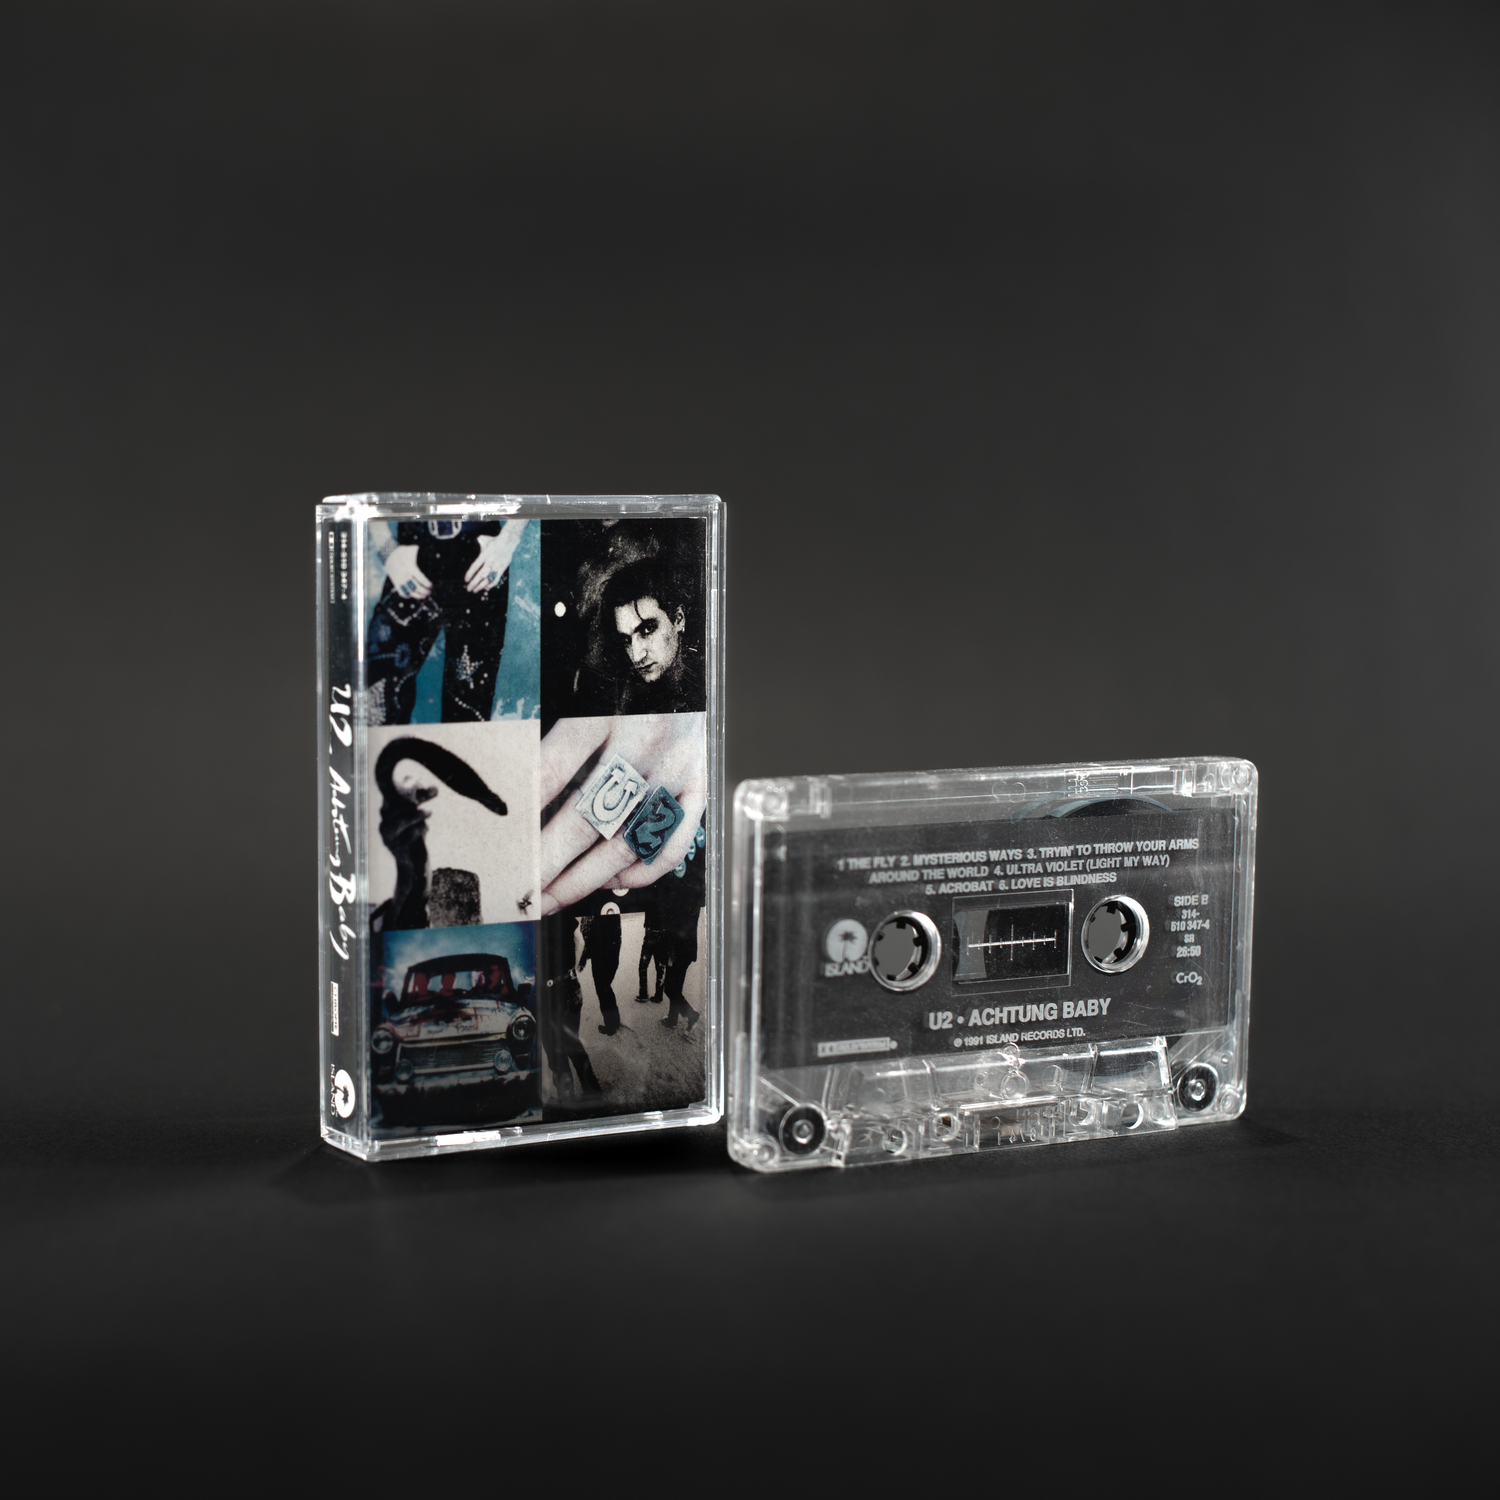 U2 - Achtung Baby - Vintage Cassette